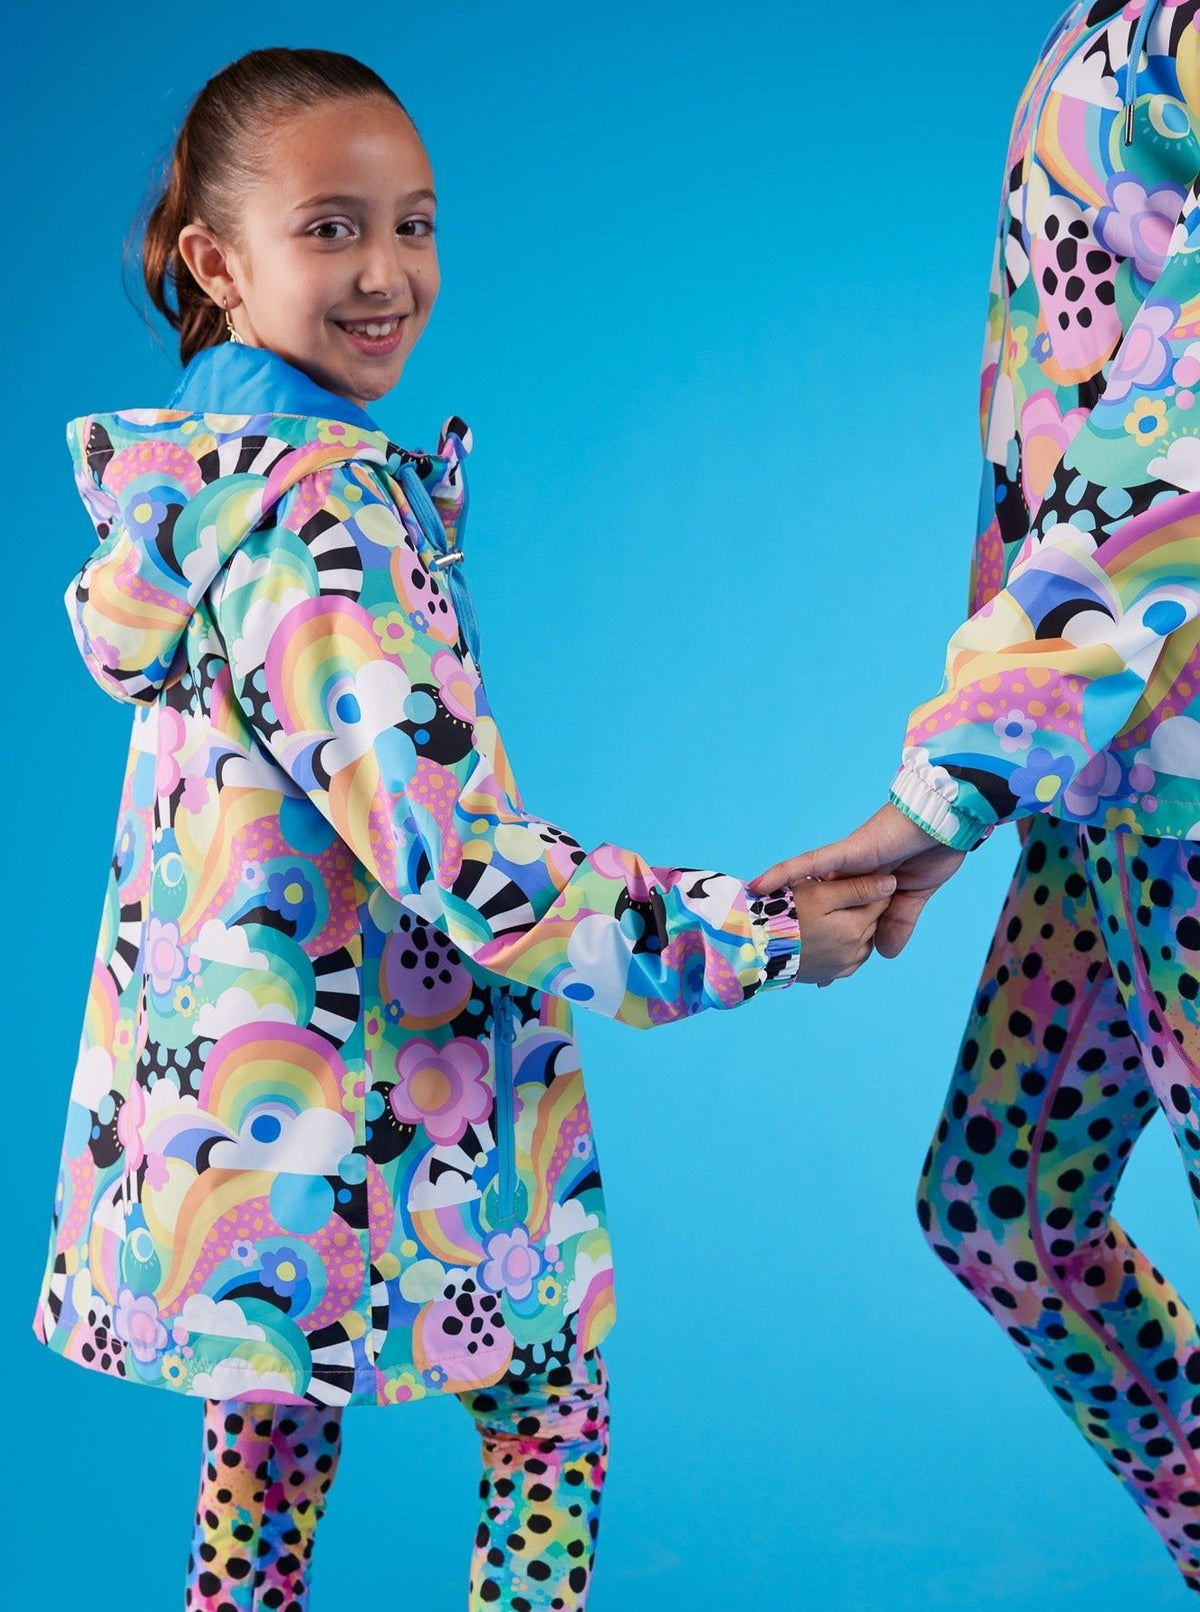 Funderland Spray Jackets - Kids - rainbow spray jackets for kids